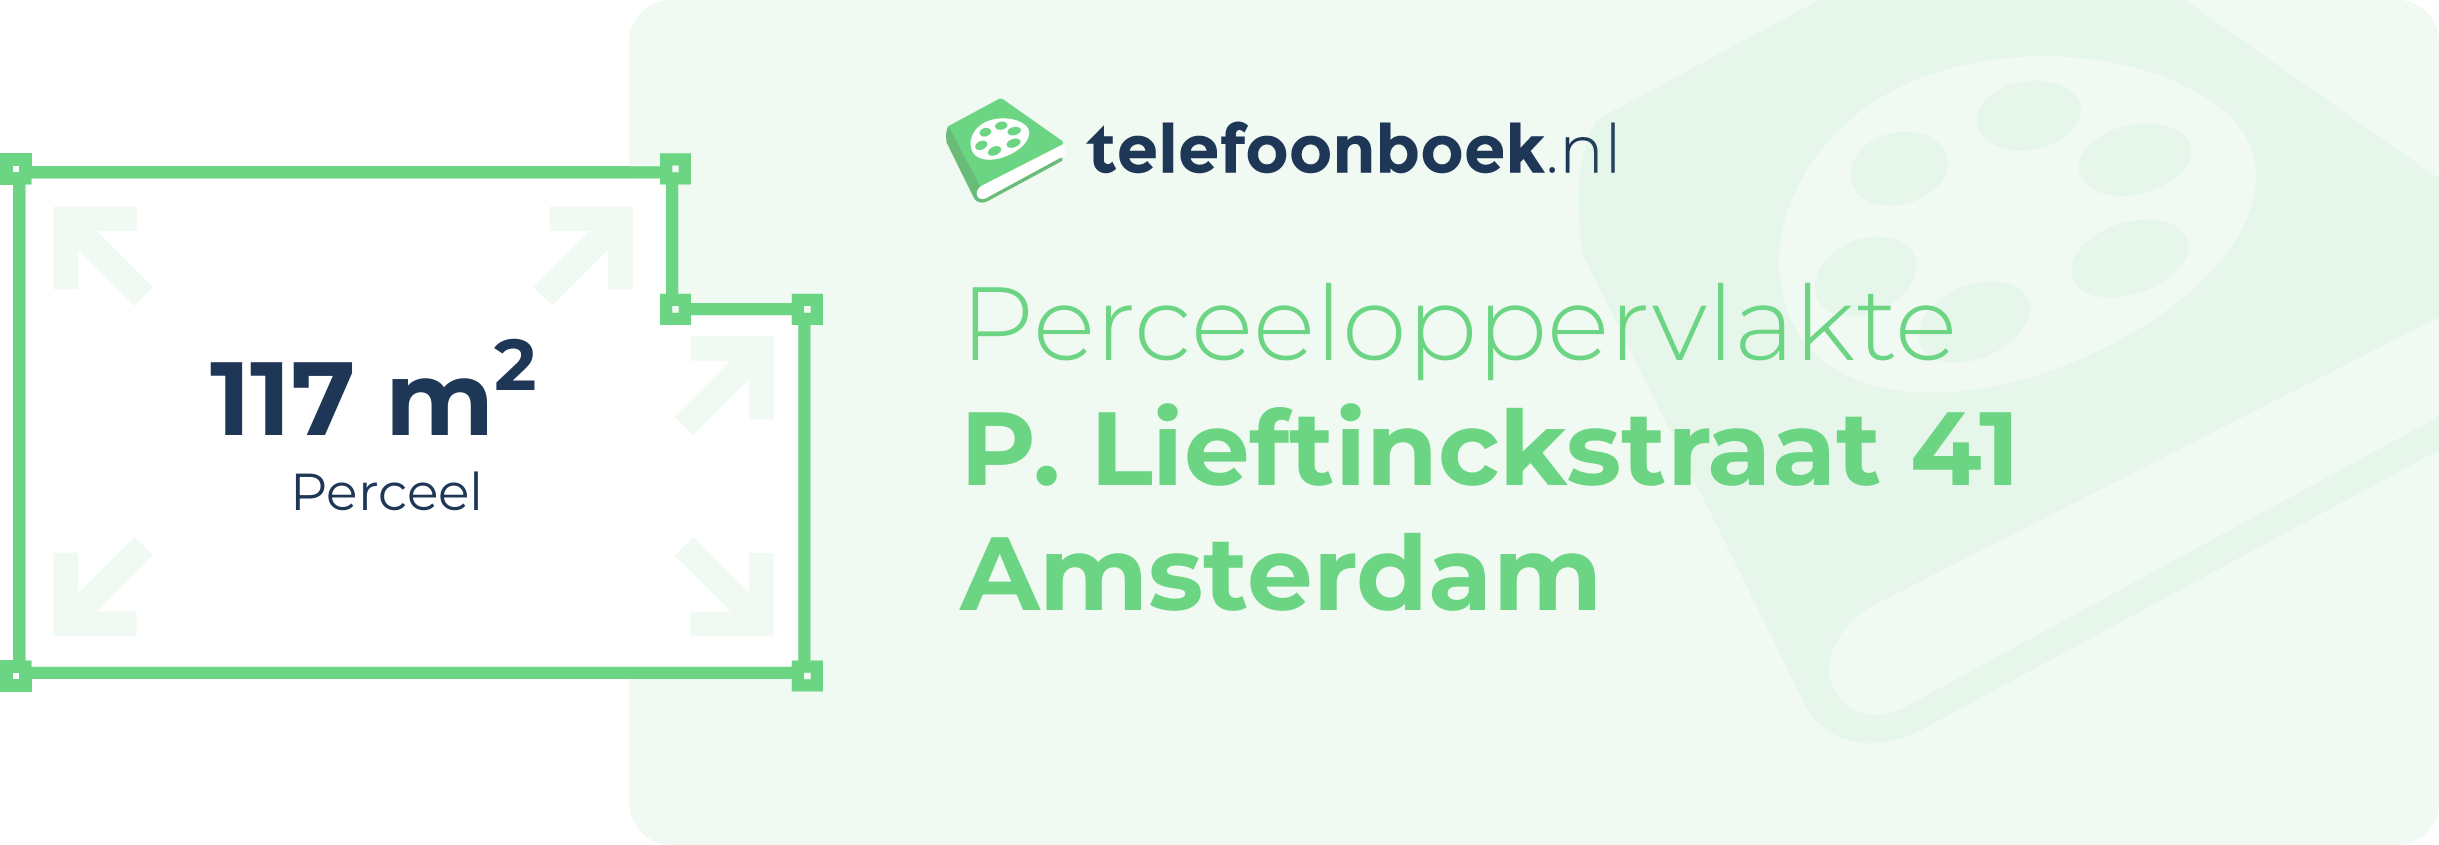 Perceeloppervlakte P. Lieftinckstraat 41 Amsterdam